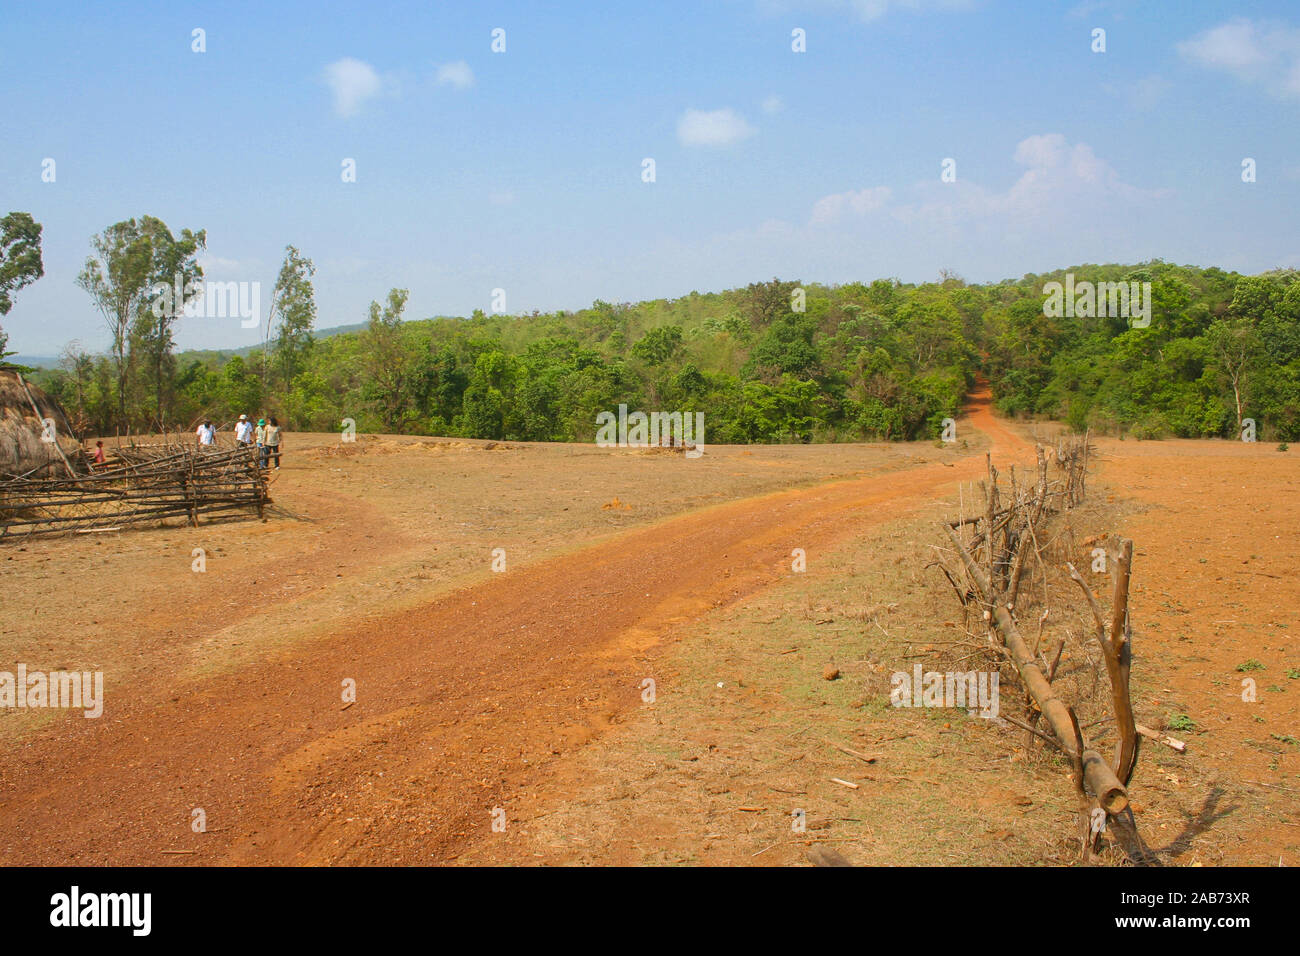 An earthen road passing along a village located near Belgaum (Karnataka-Goa border) Stock Photo